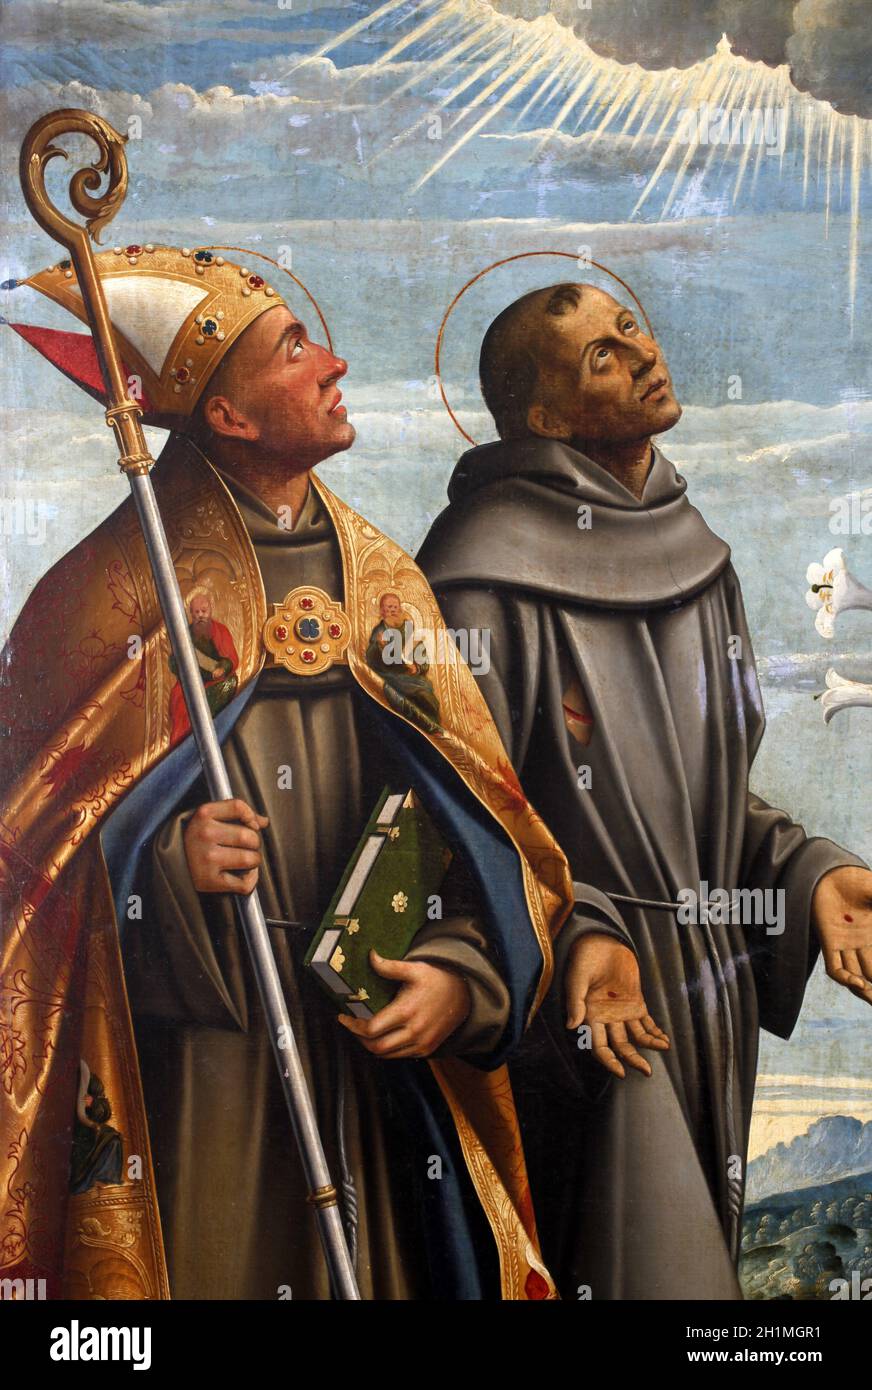 Girolamo da Santa Croce: St. Franziskus und St. Bonaventure, Altarbild Franziskanerkirche in Kosljun, Kroatien Stockfoto